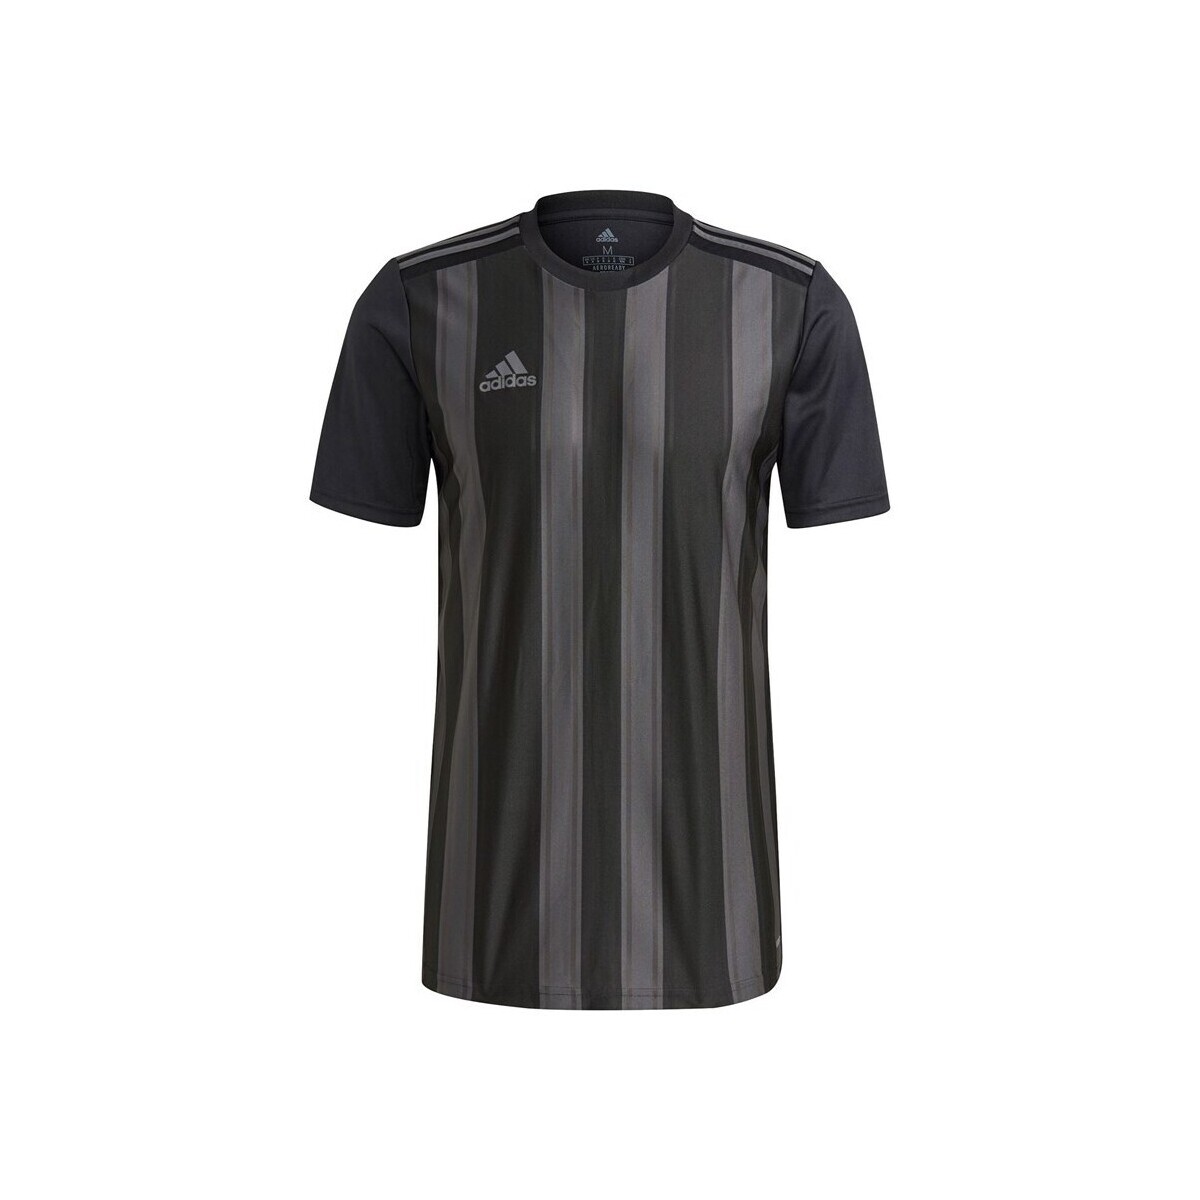 Clothing Men Short-sleeved t-shirts adidas Originals Striped 21 Grey, Black